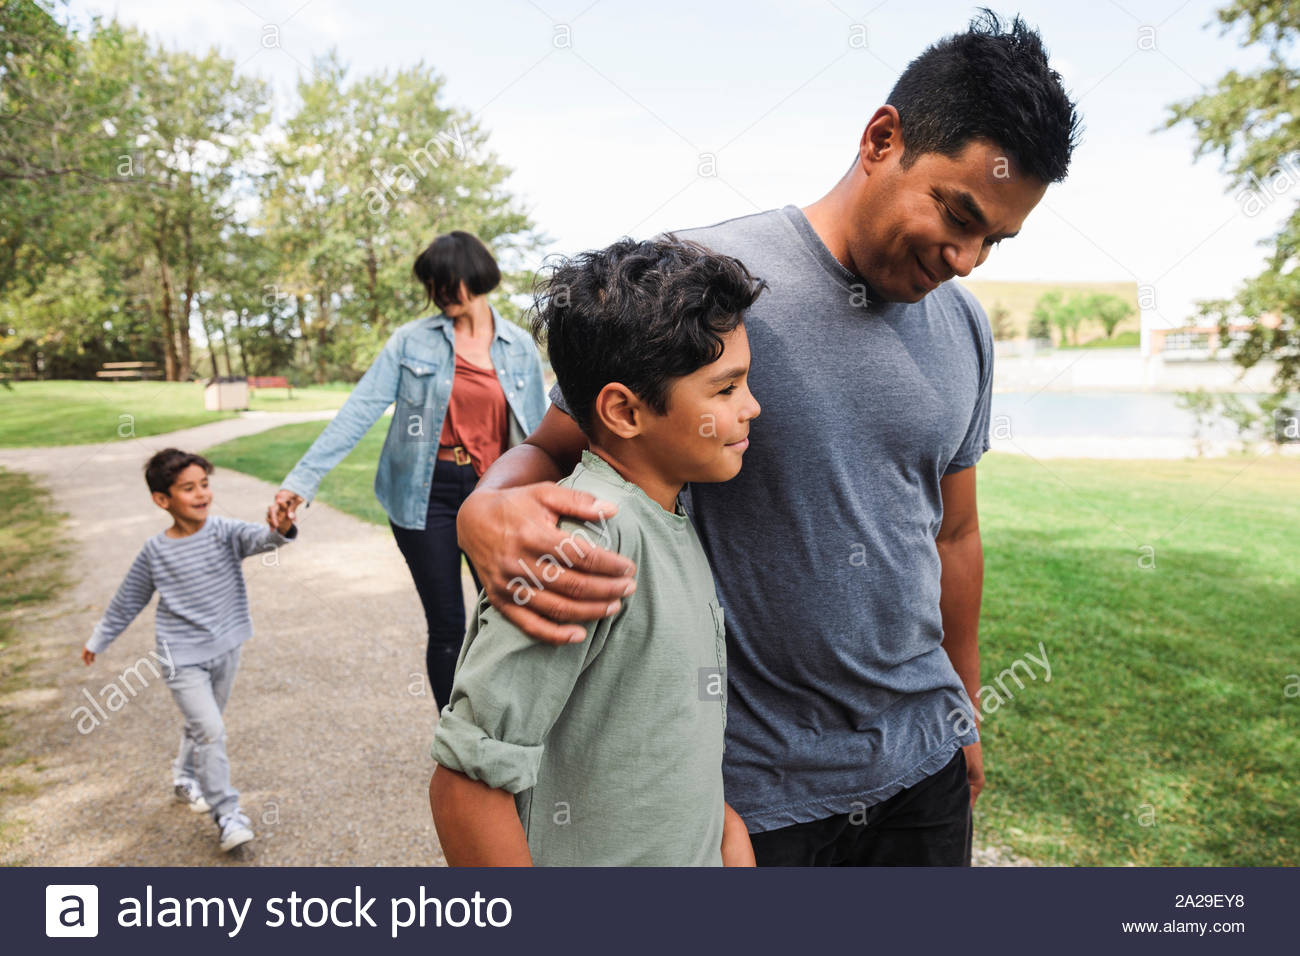 Family walking in urban park Stock Photo